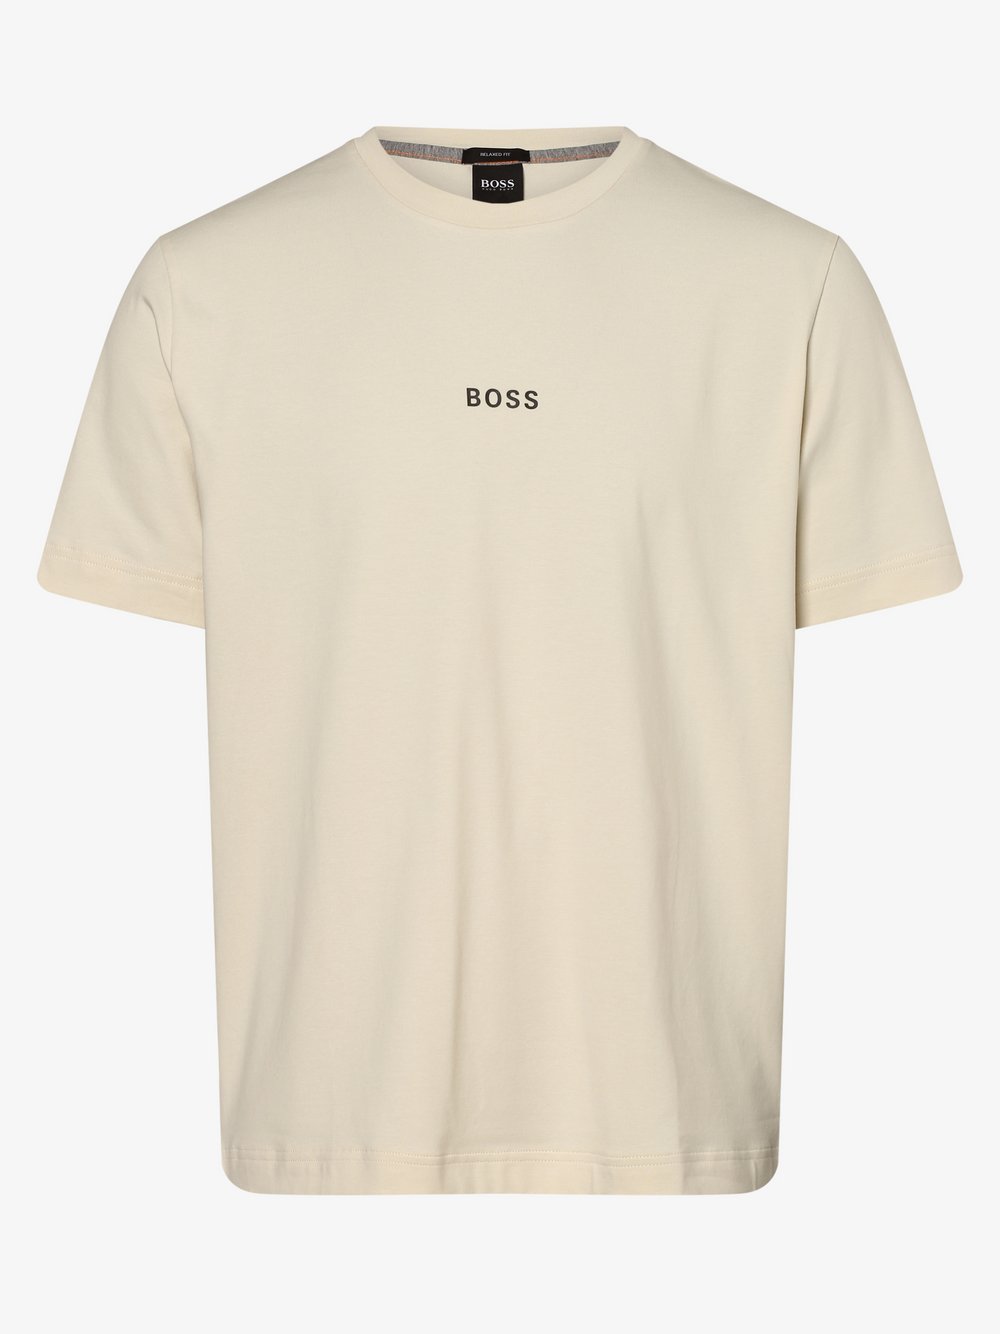 BOSS Casual - T-shirt męski – TChup 1, biały